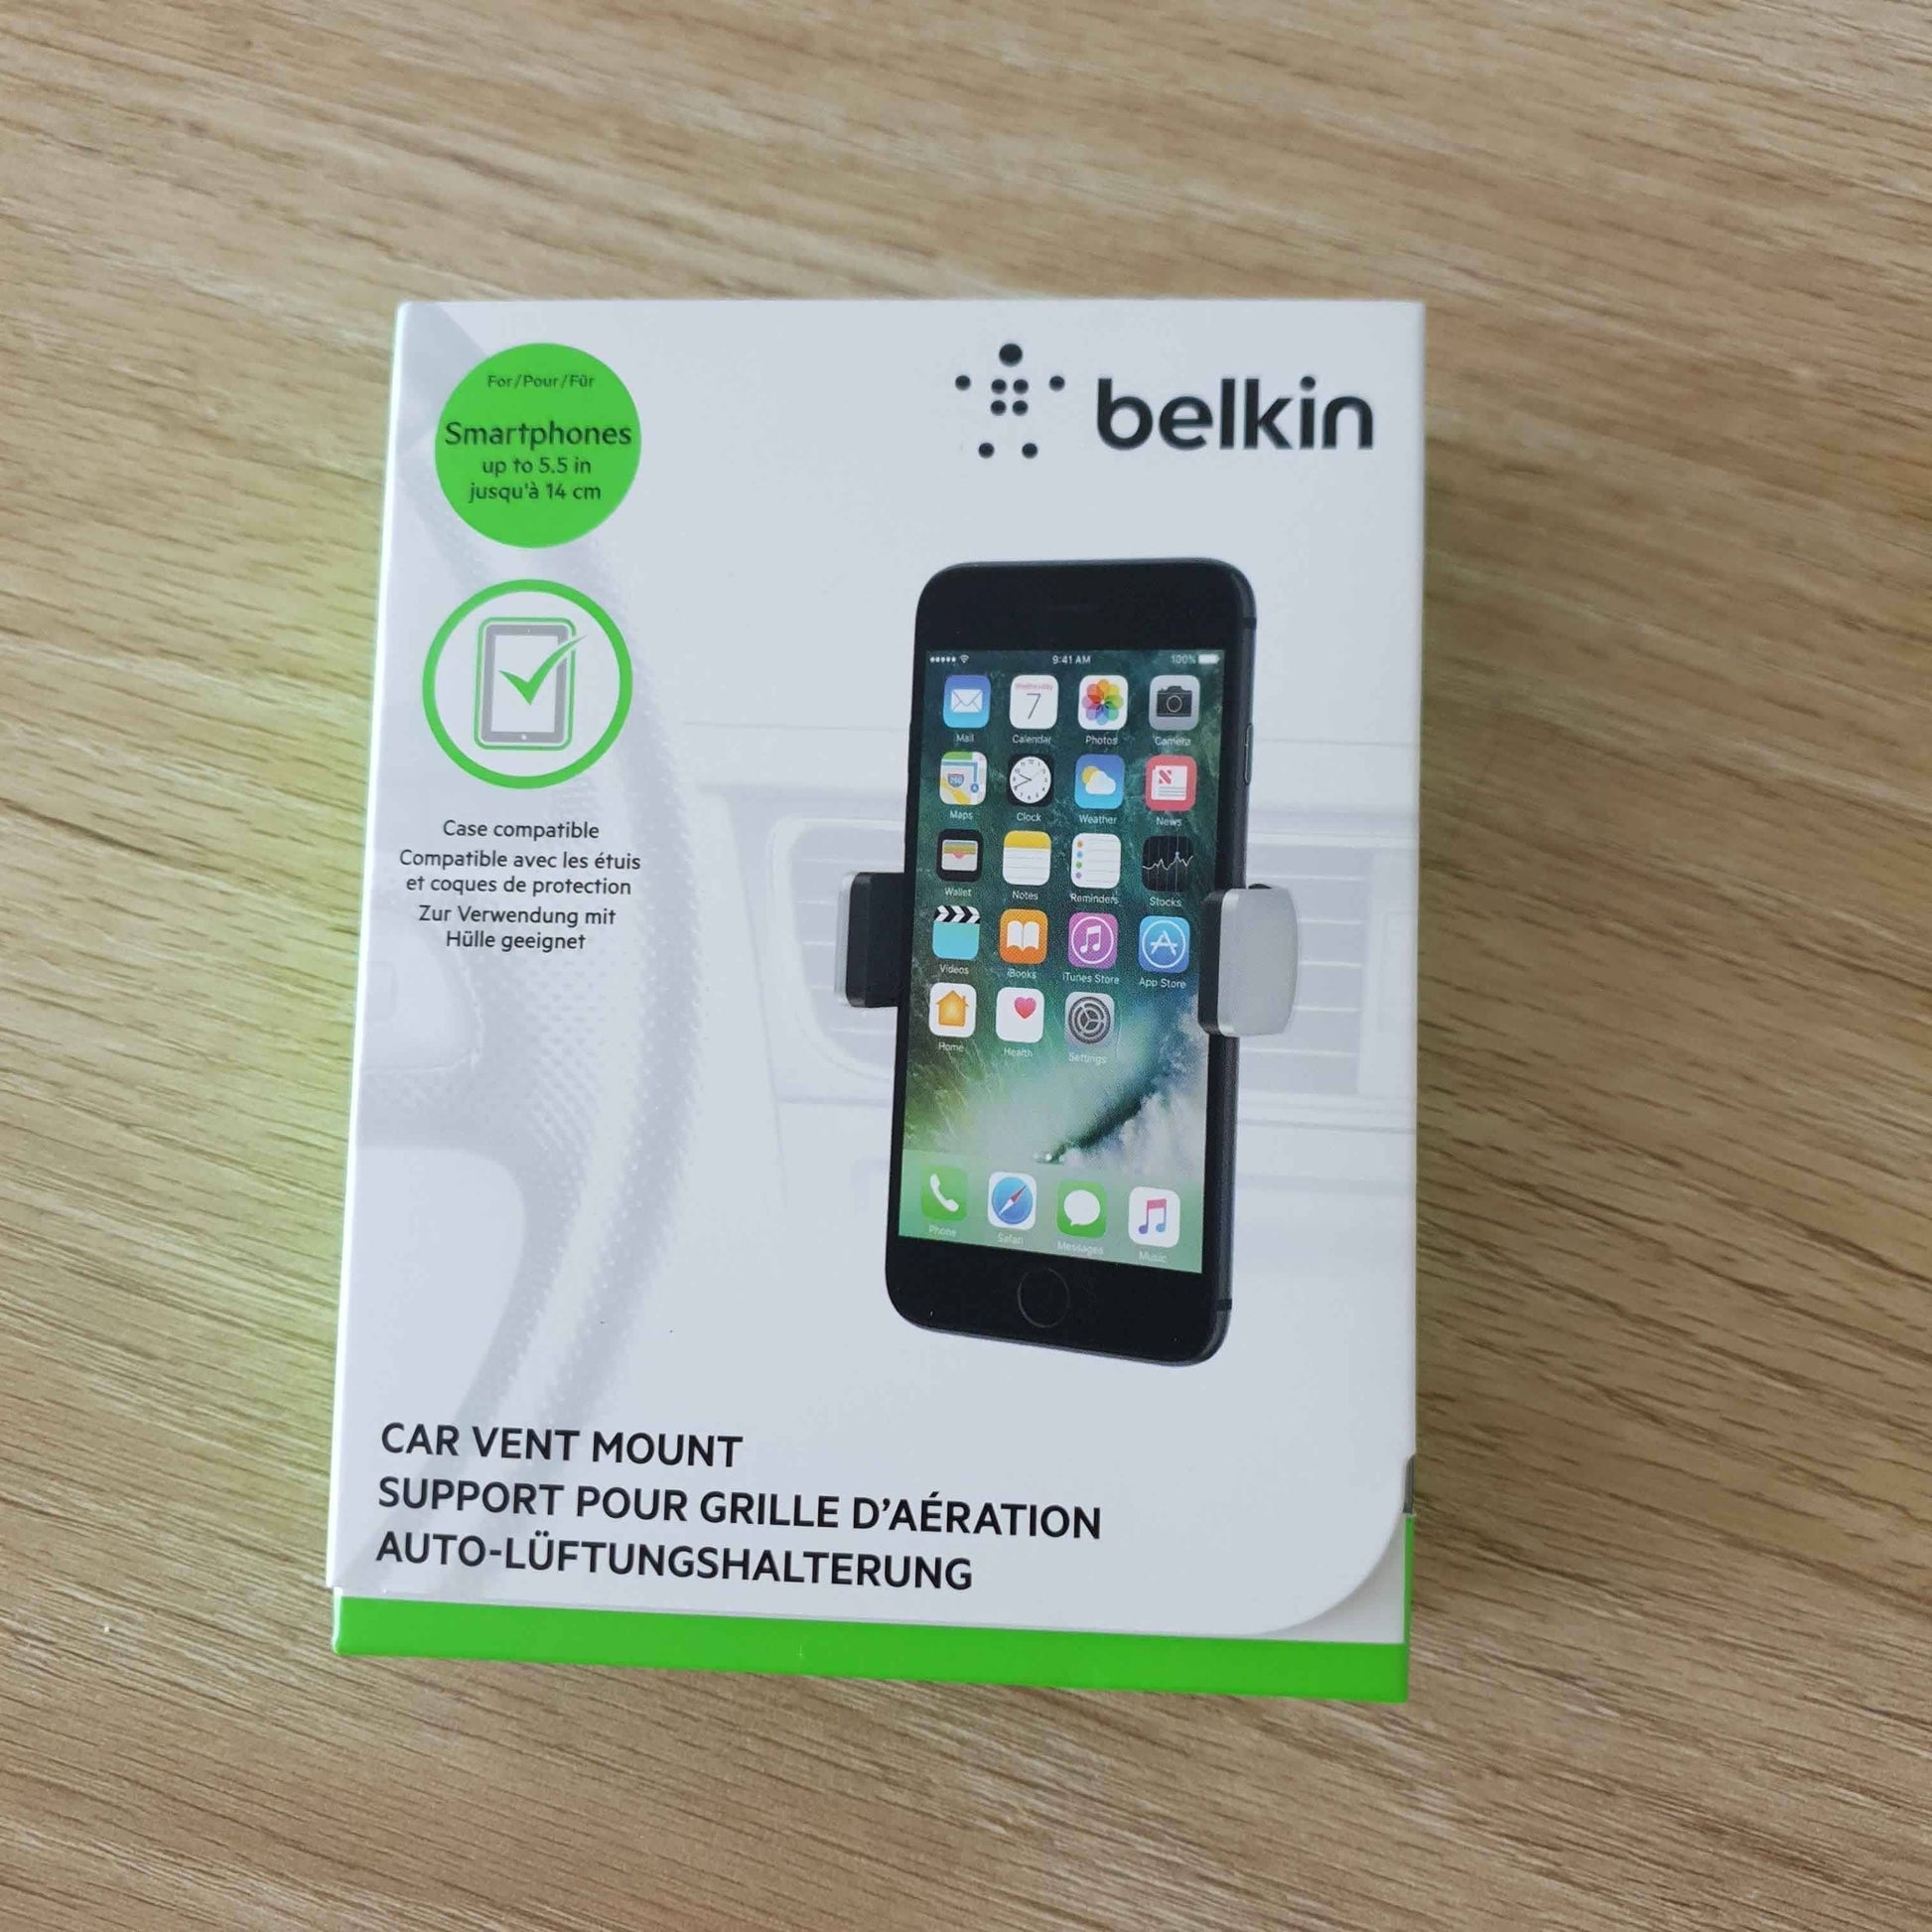 Car Vent Mount for Smartphones by Belkin 